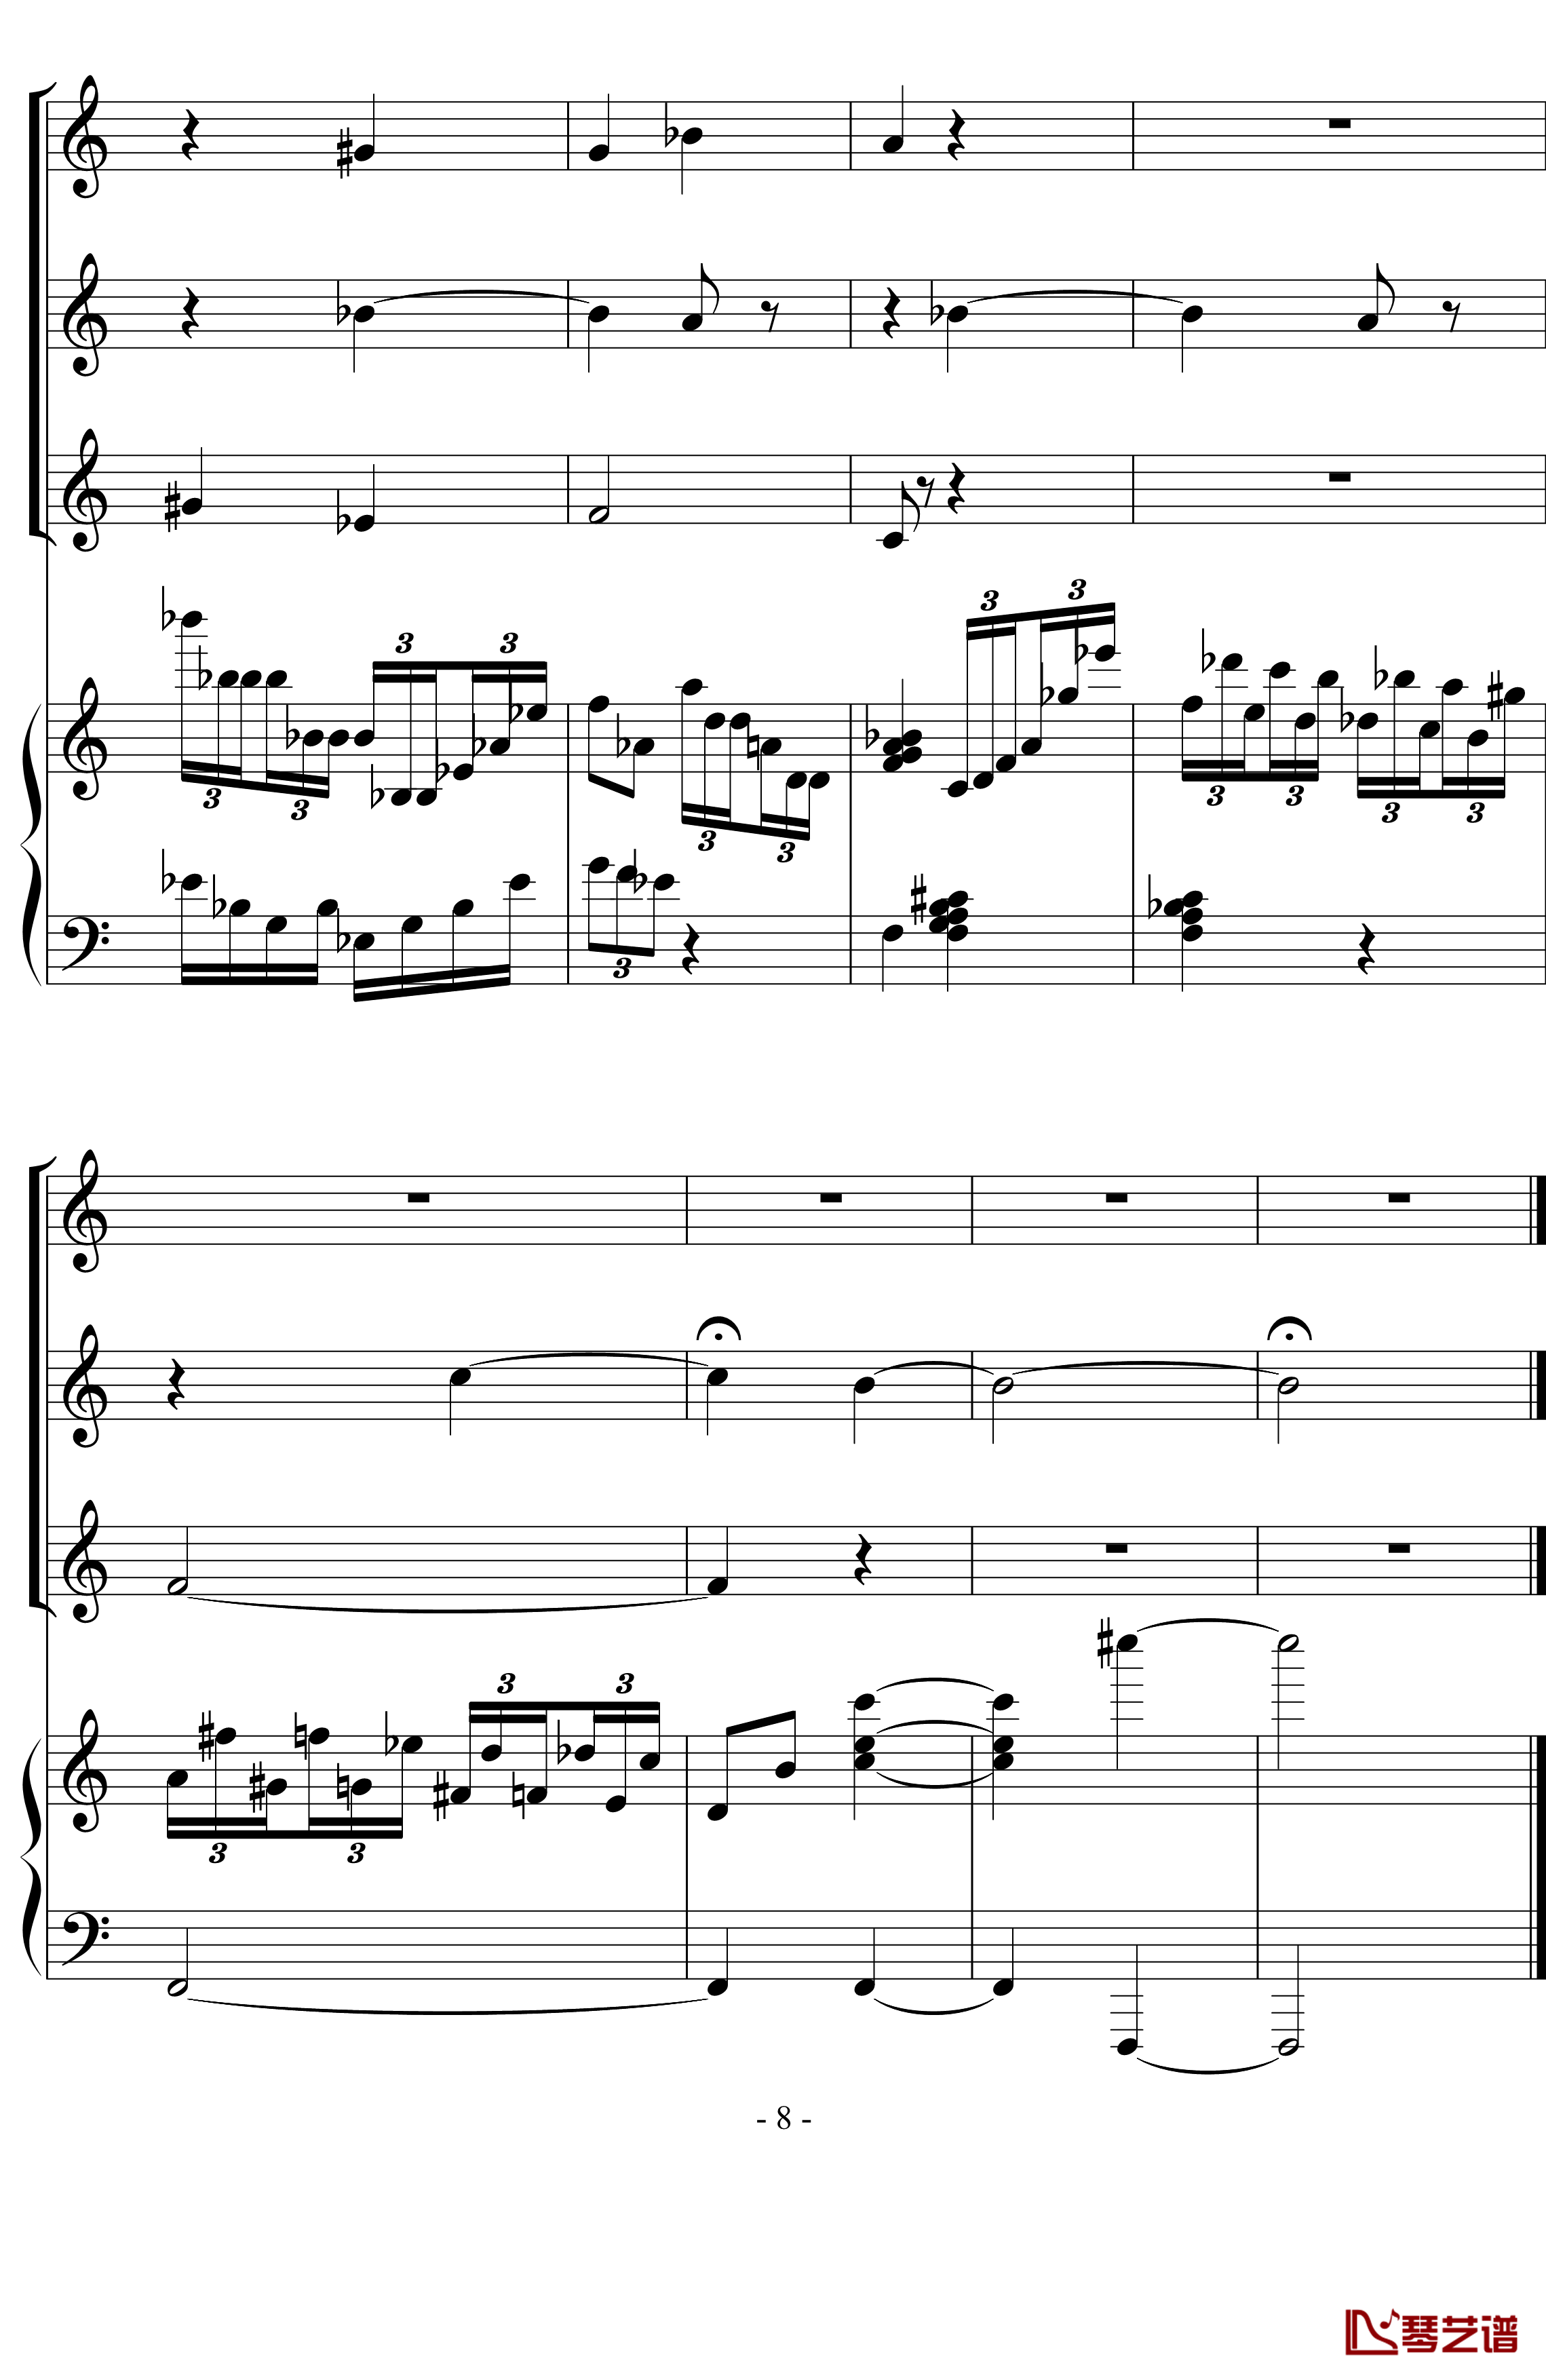 BACH变奏曲钢琴谱 第一和第二变奏-流行追梦人8